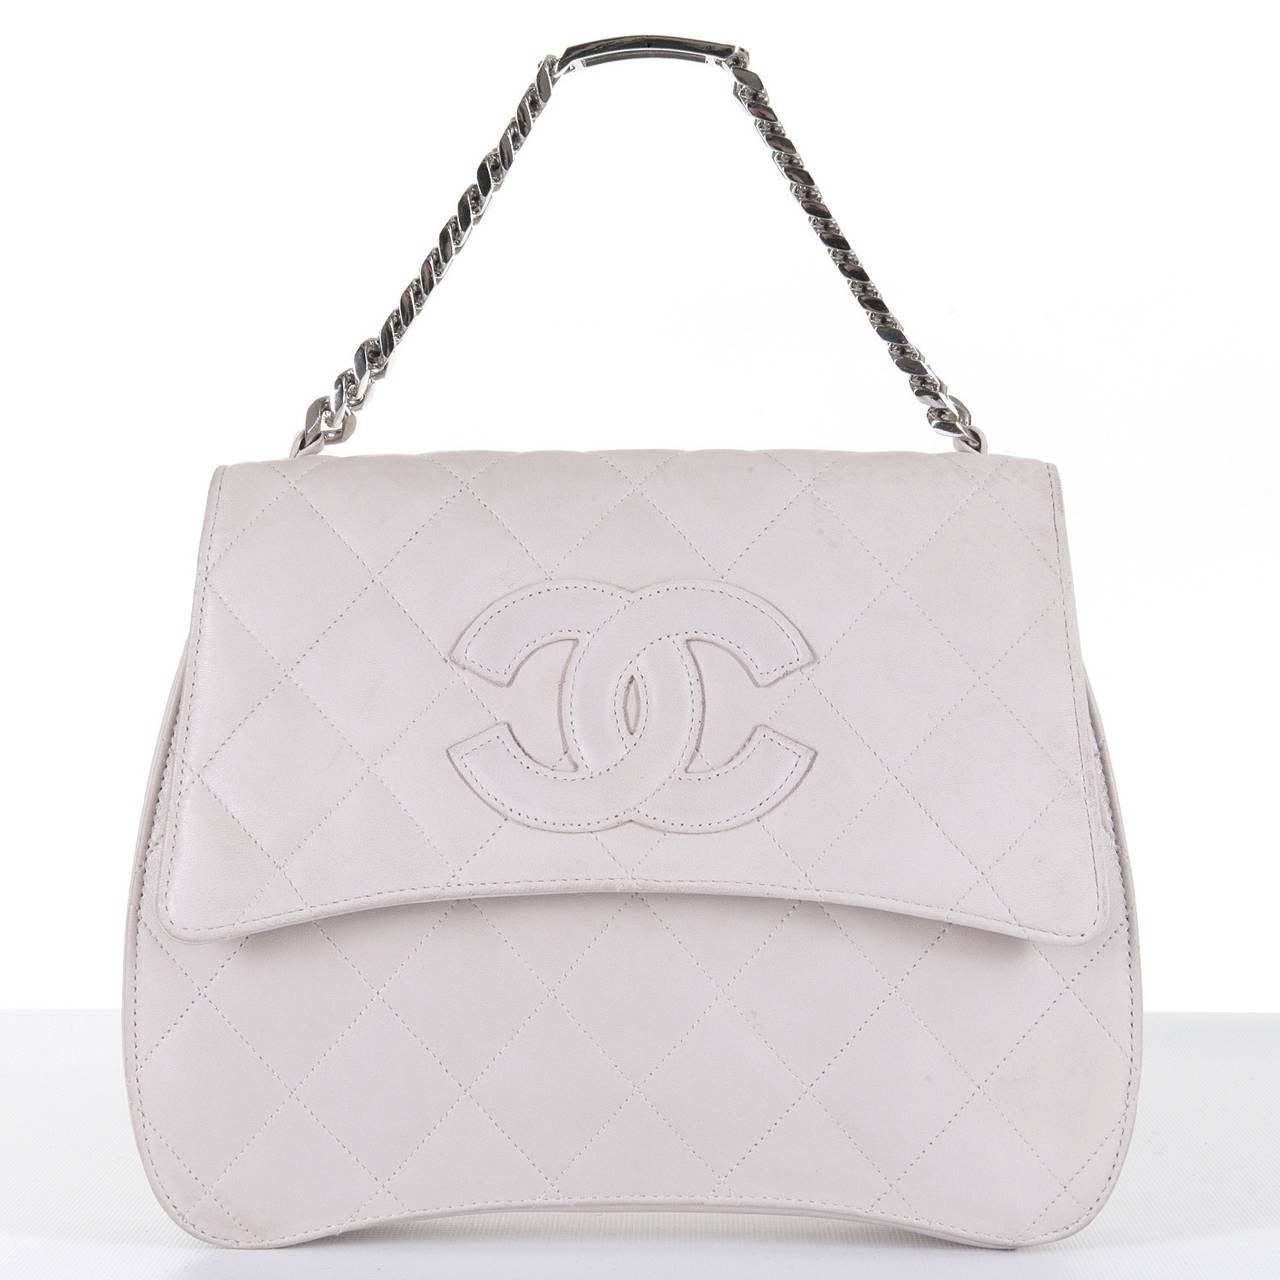 Super Chanel 25cm, Quilted Calfskin Flap Bag in Beige with Palladium Hardware 2